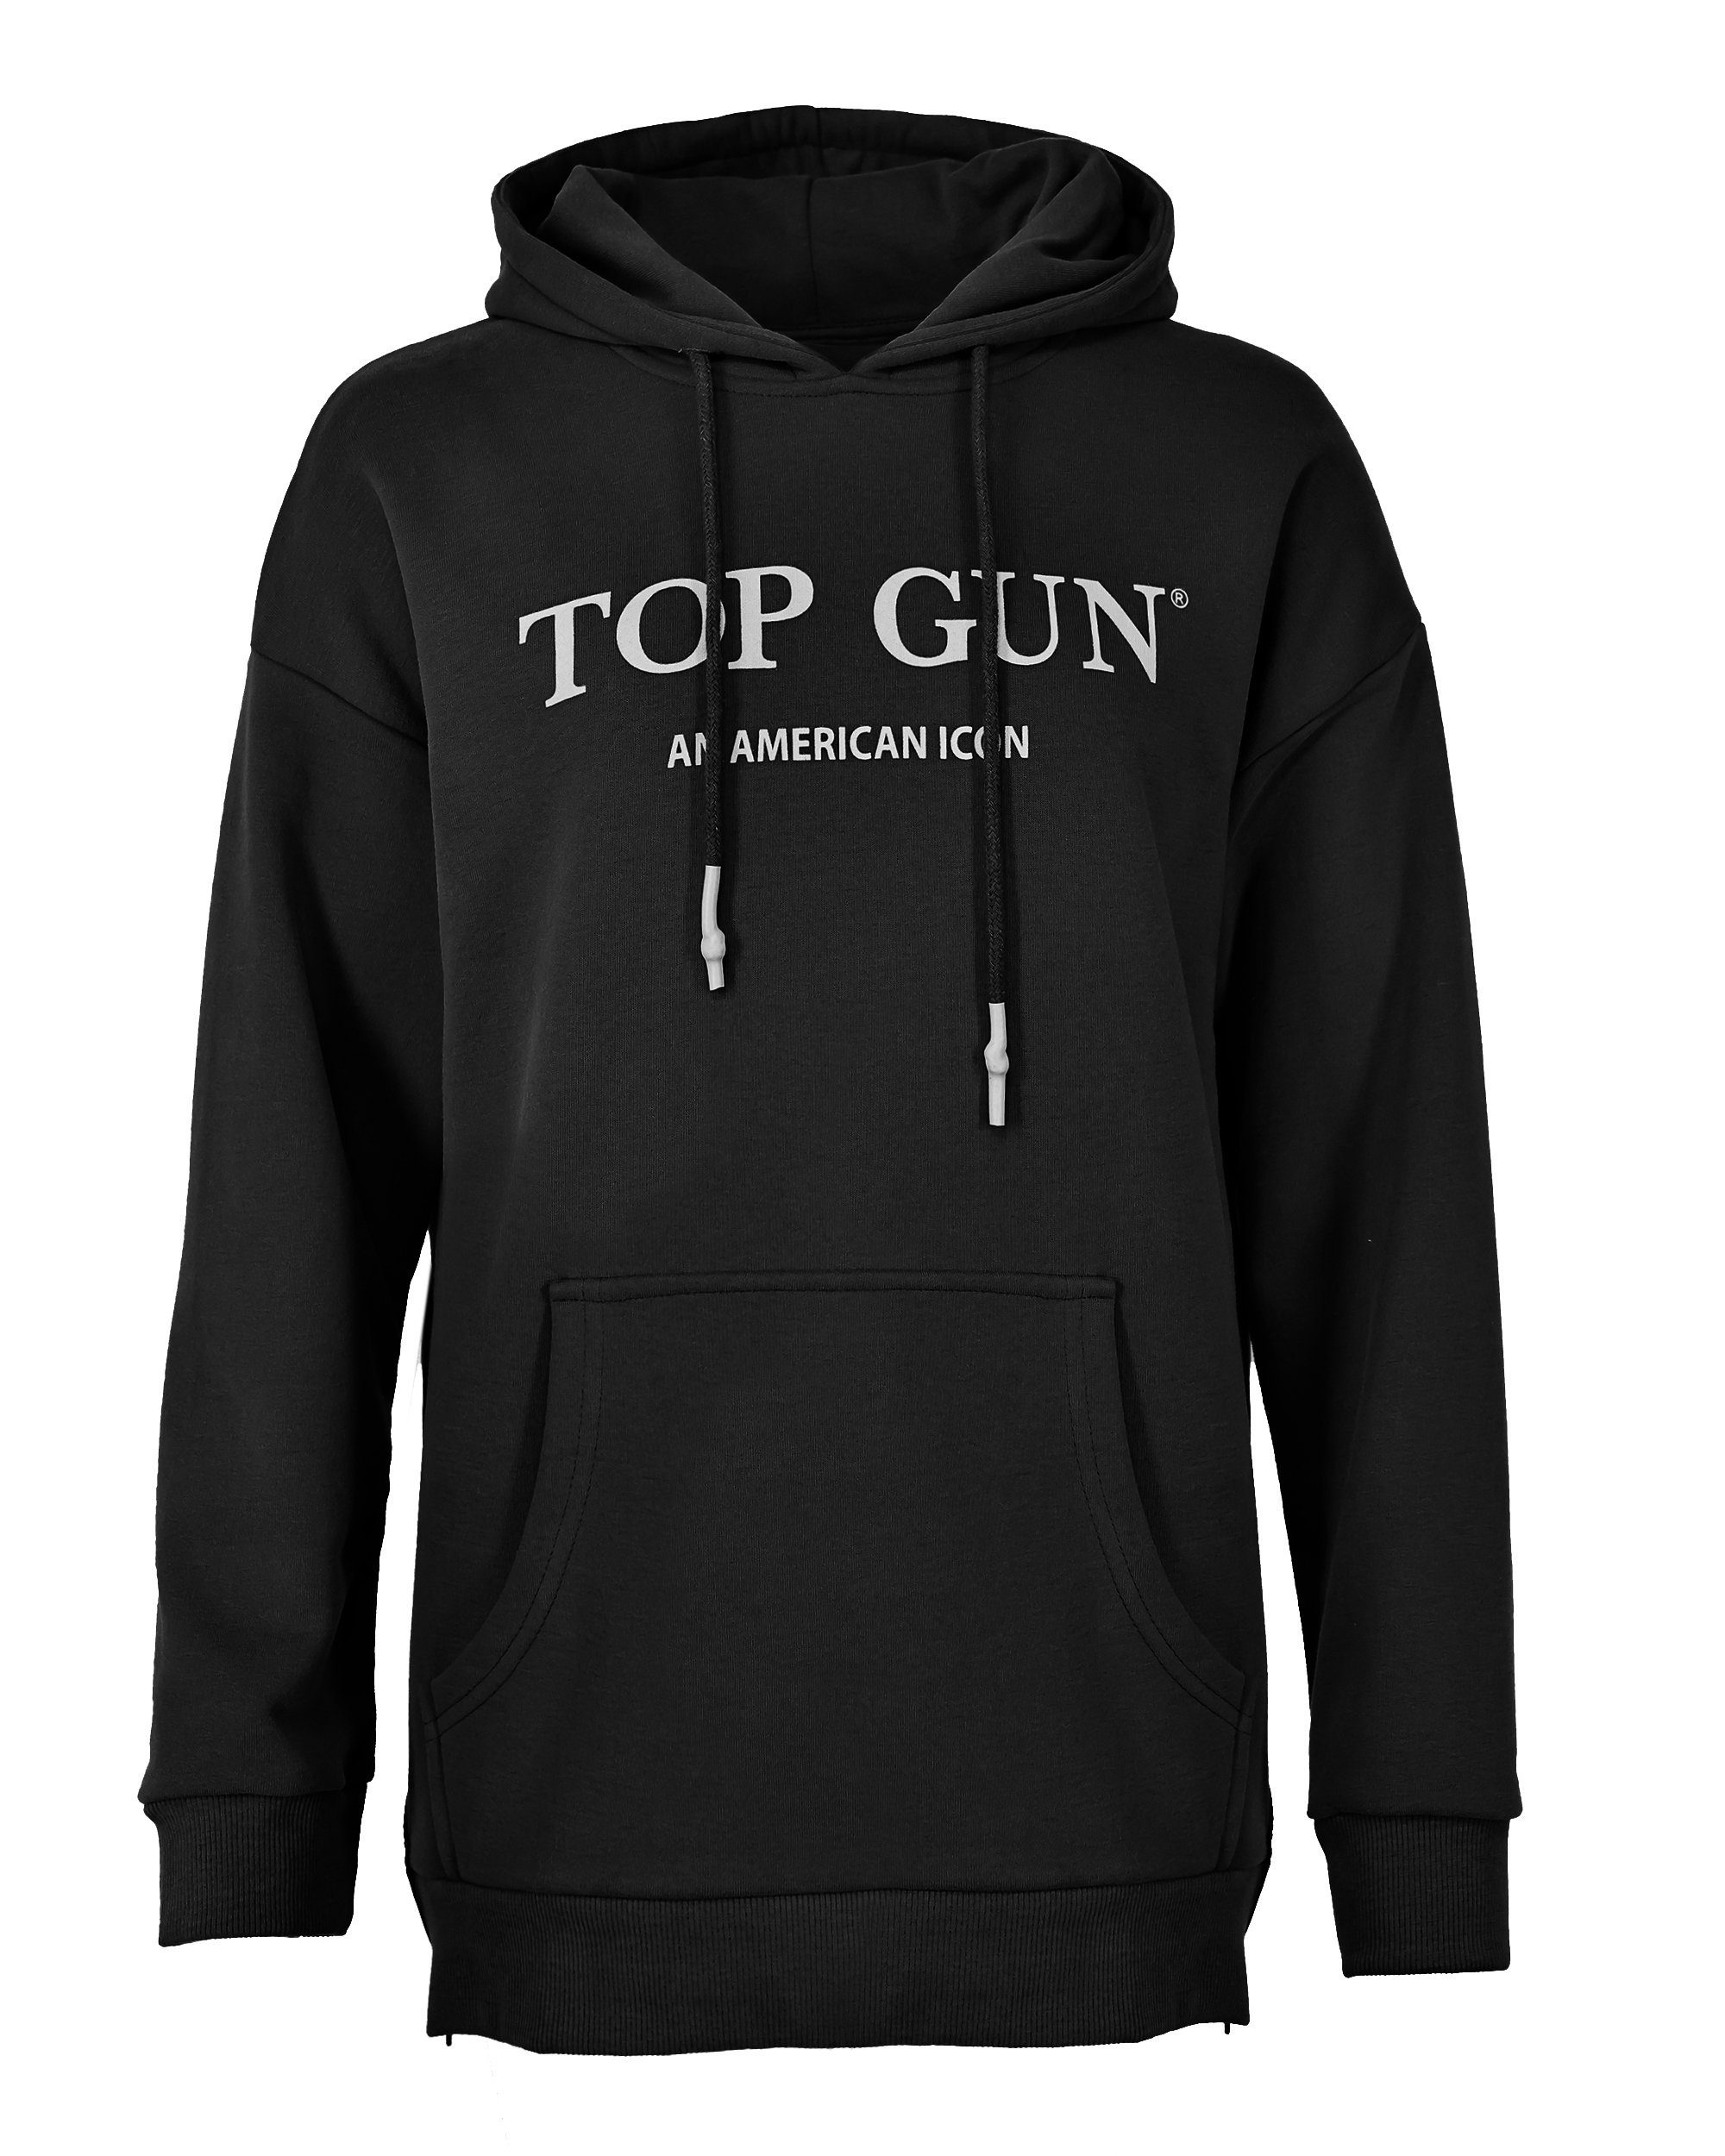 TG20214003 Kapuzenpullover GUN black TOP